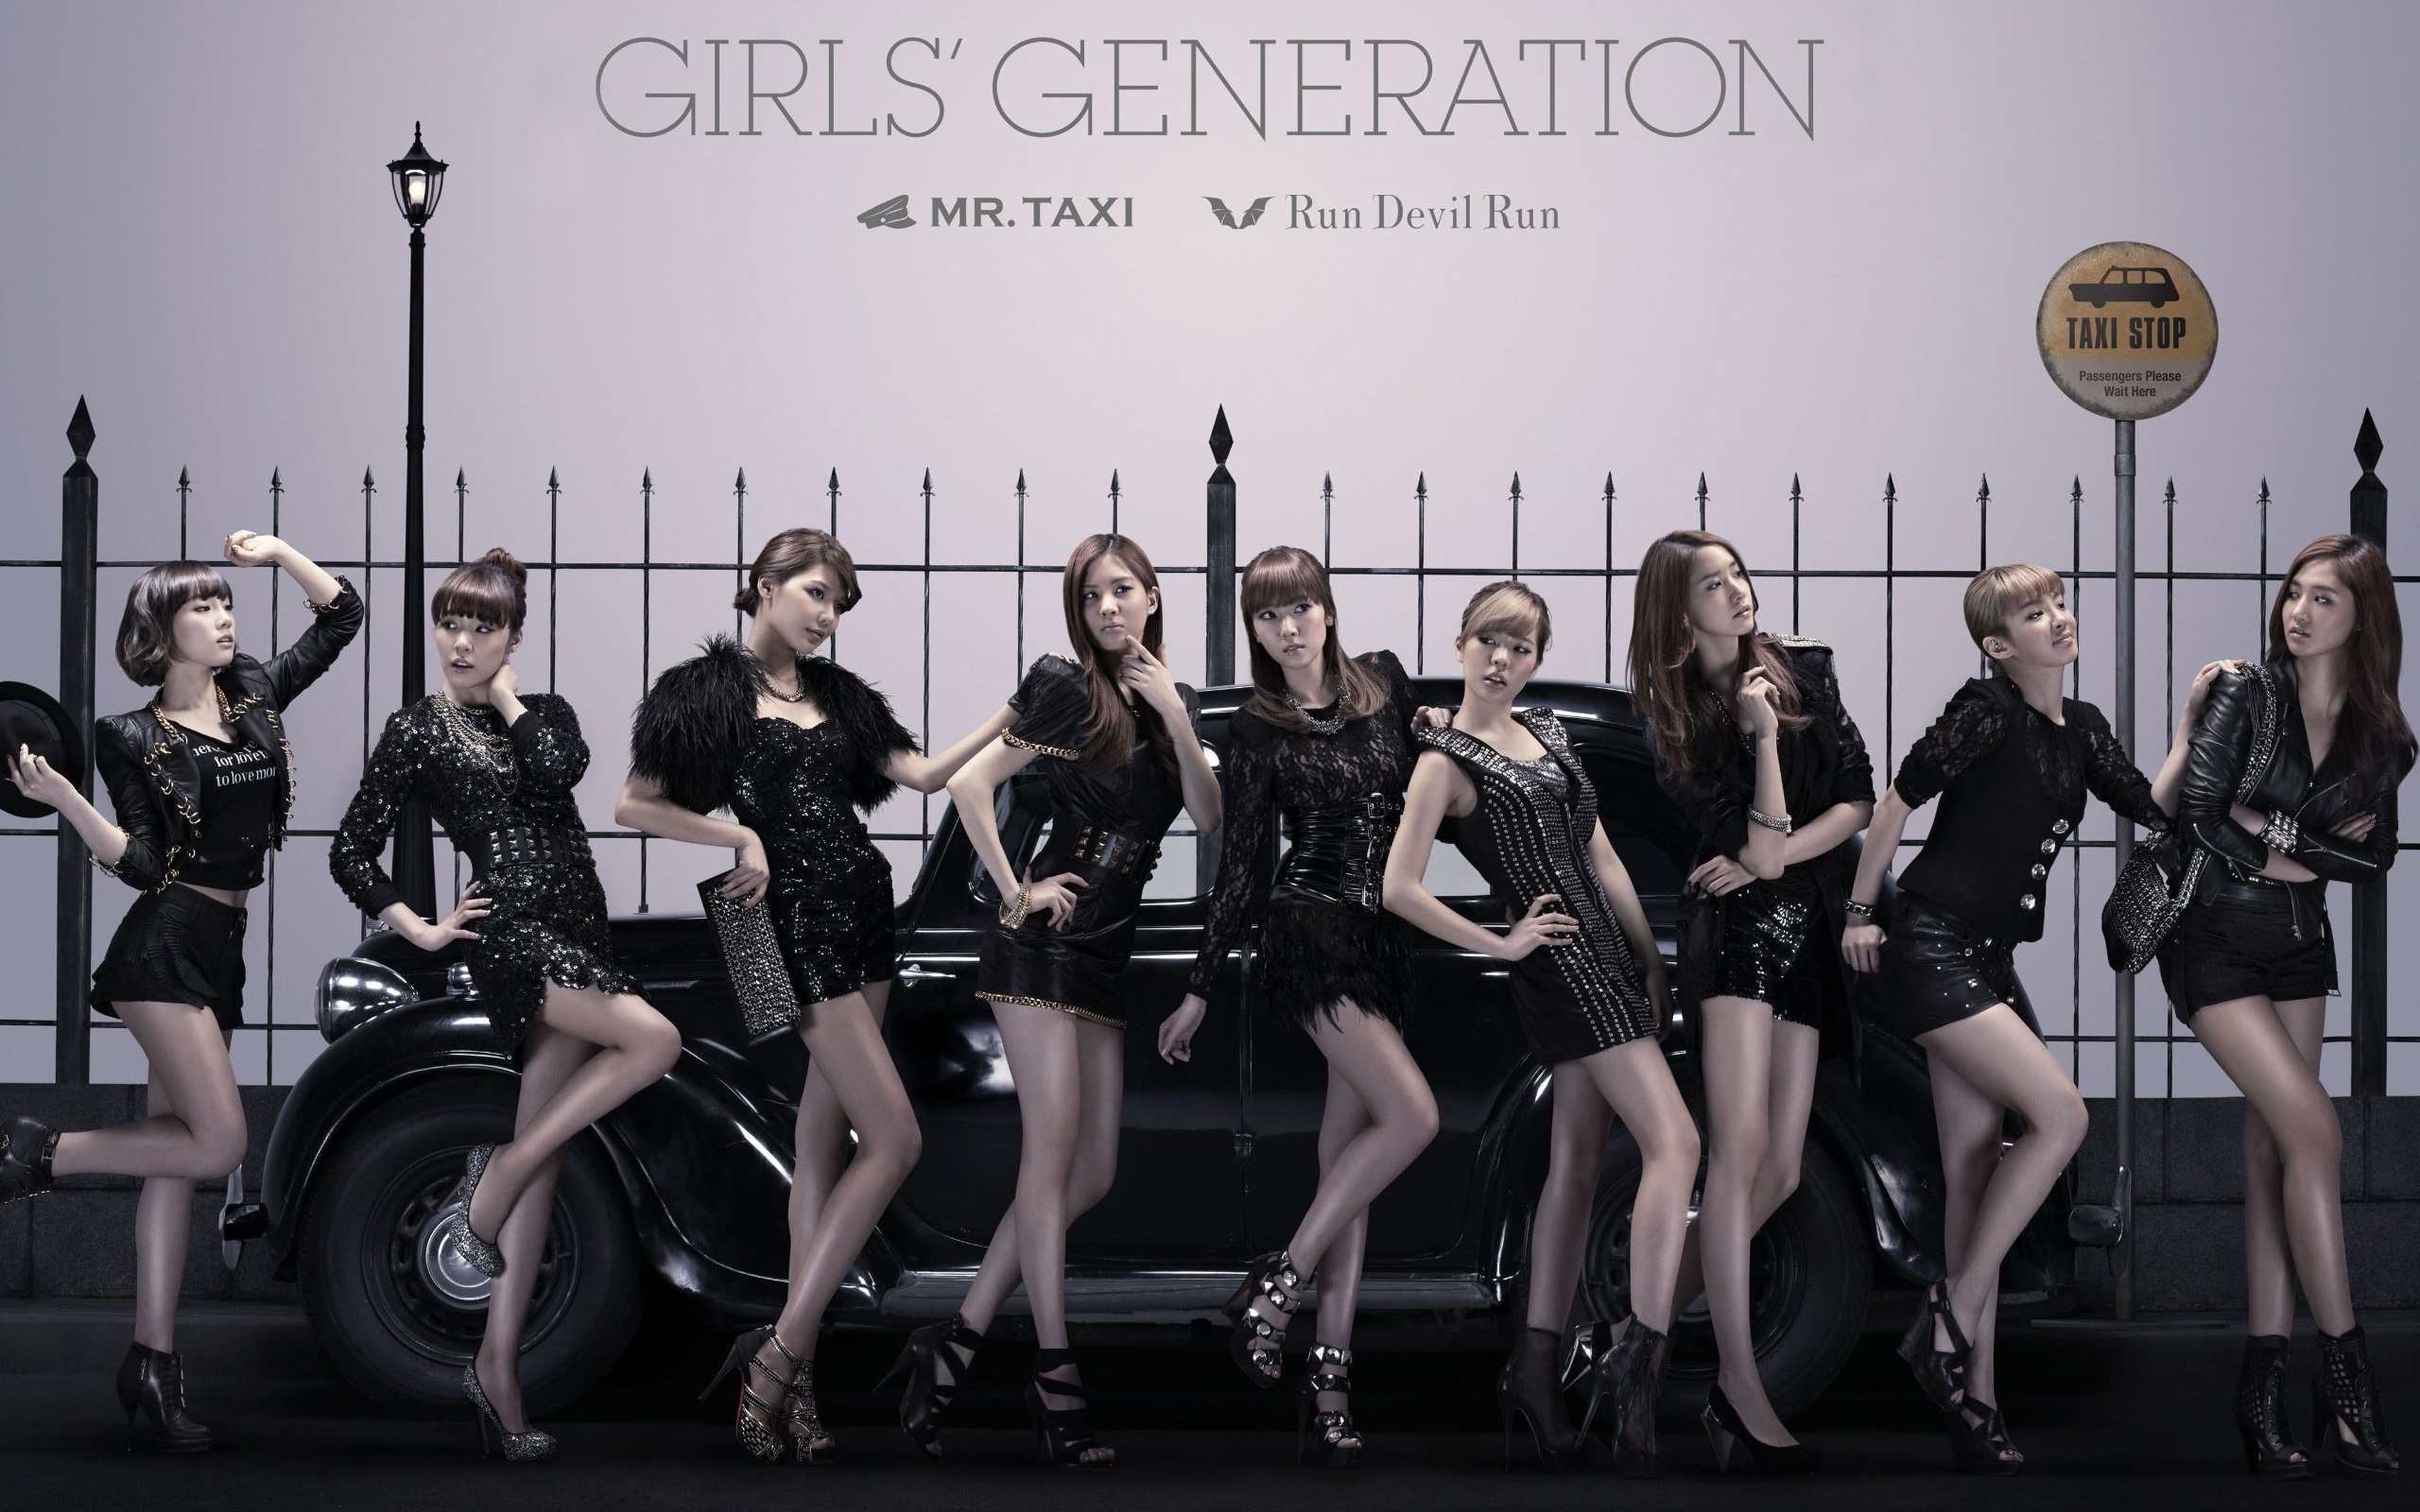 Generation Girls HD wallpapers dernière collection #14 - 2560x1600